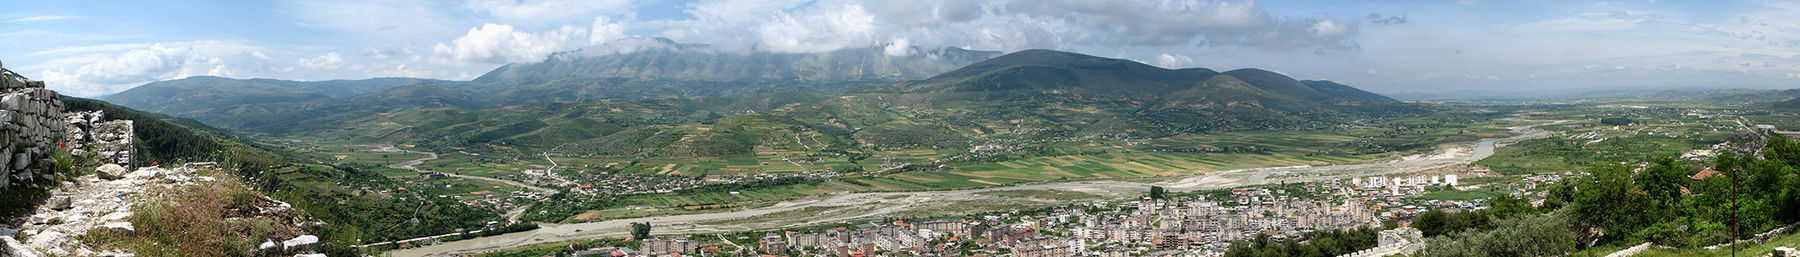 Албания banner.jpg